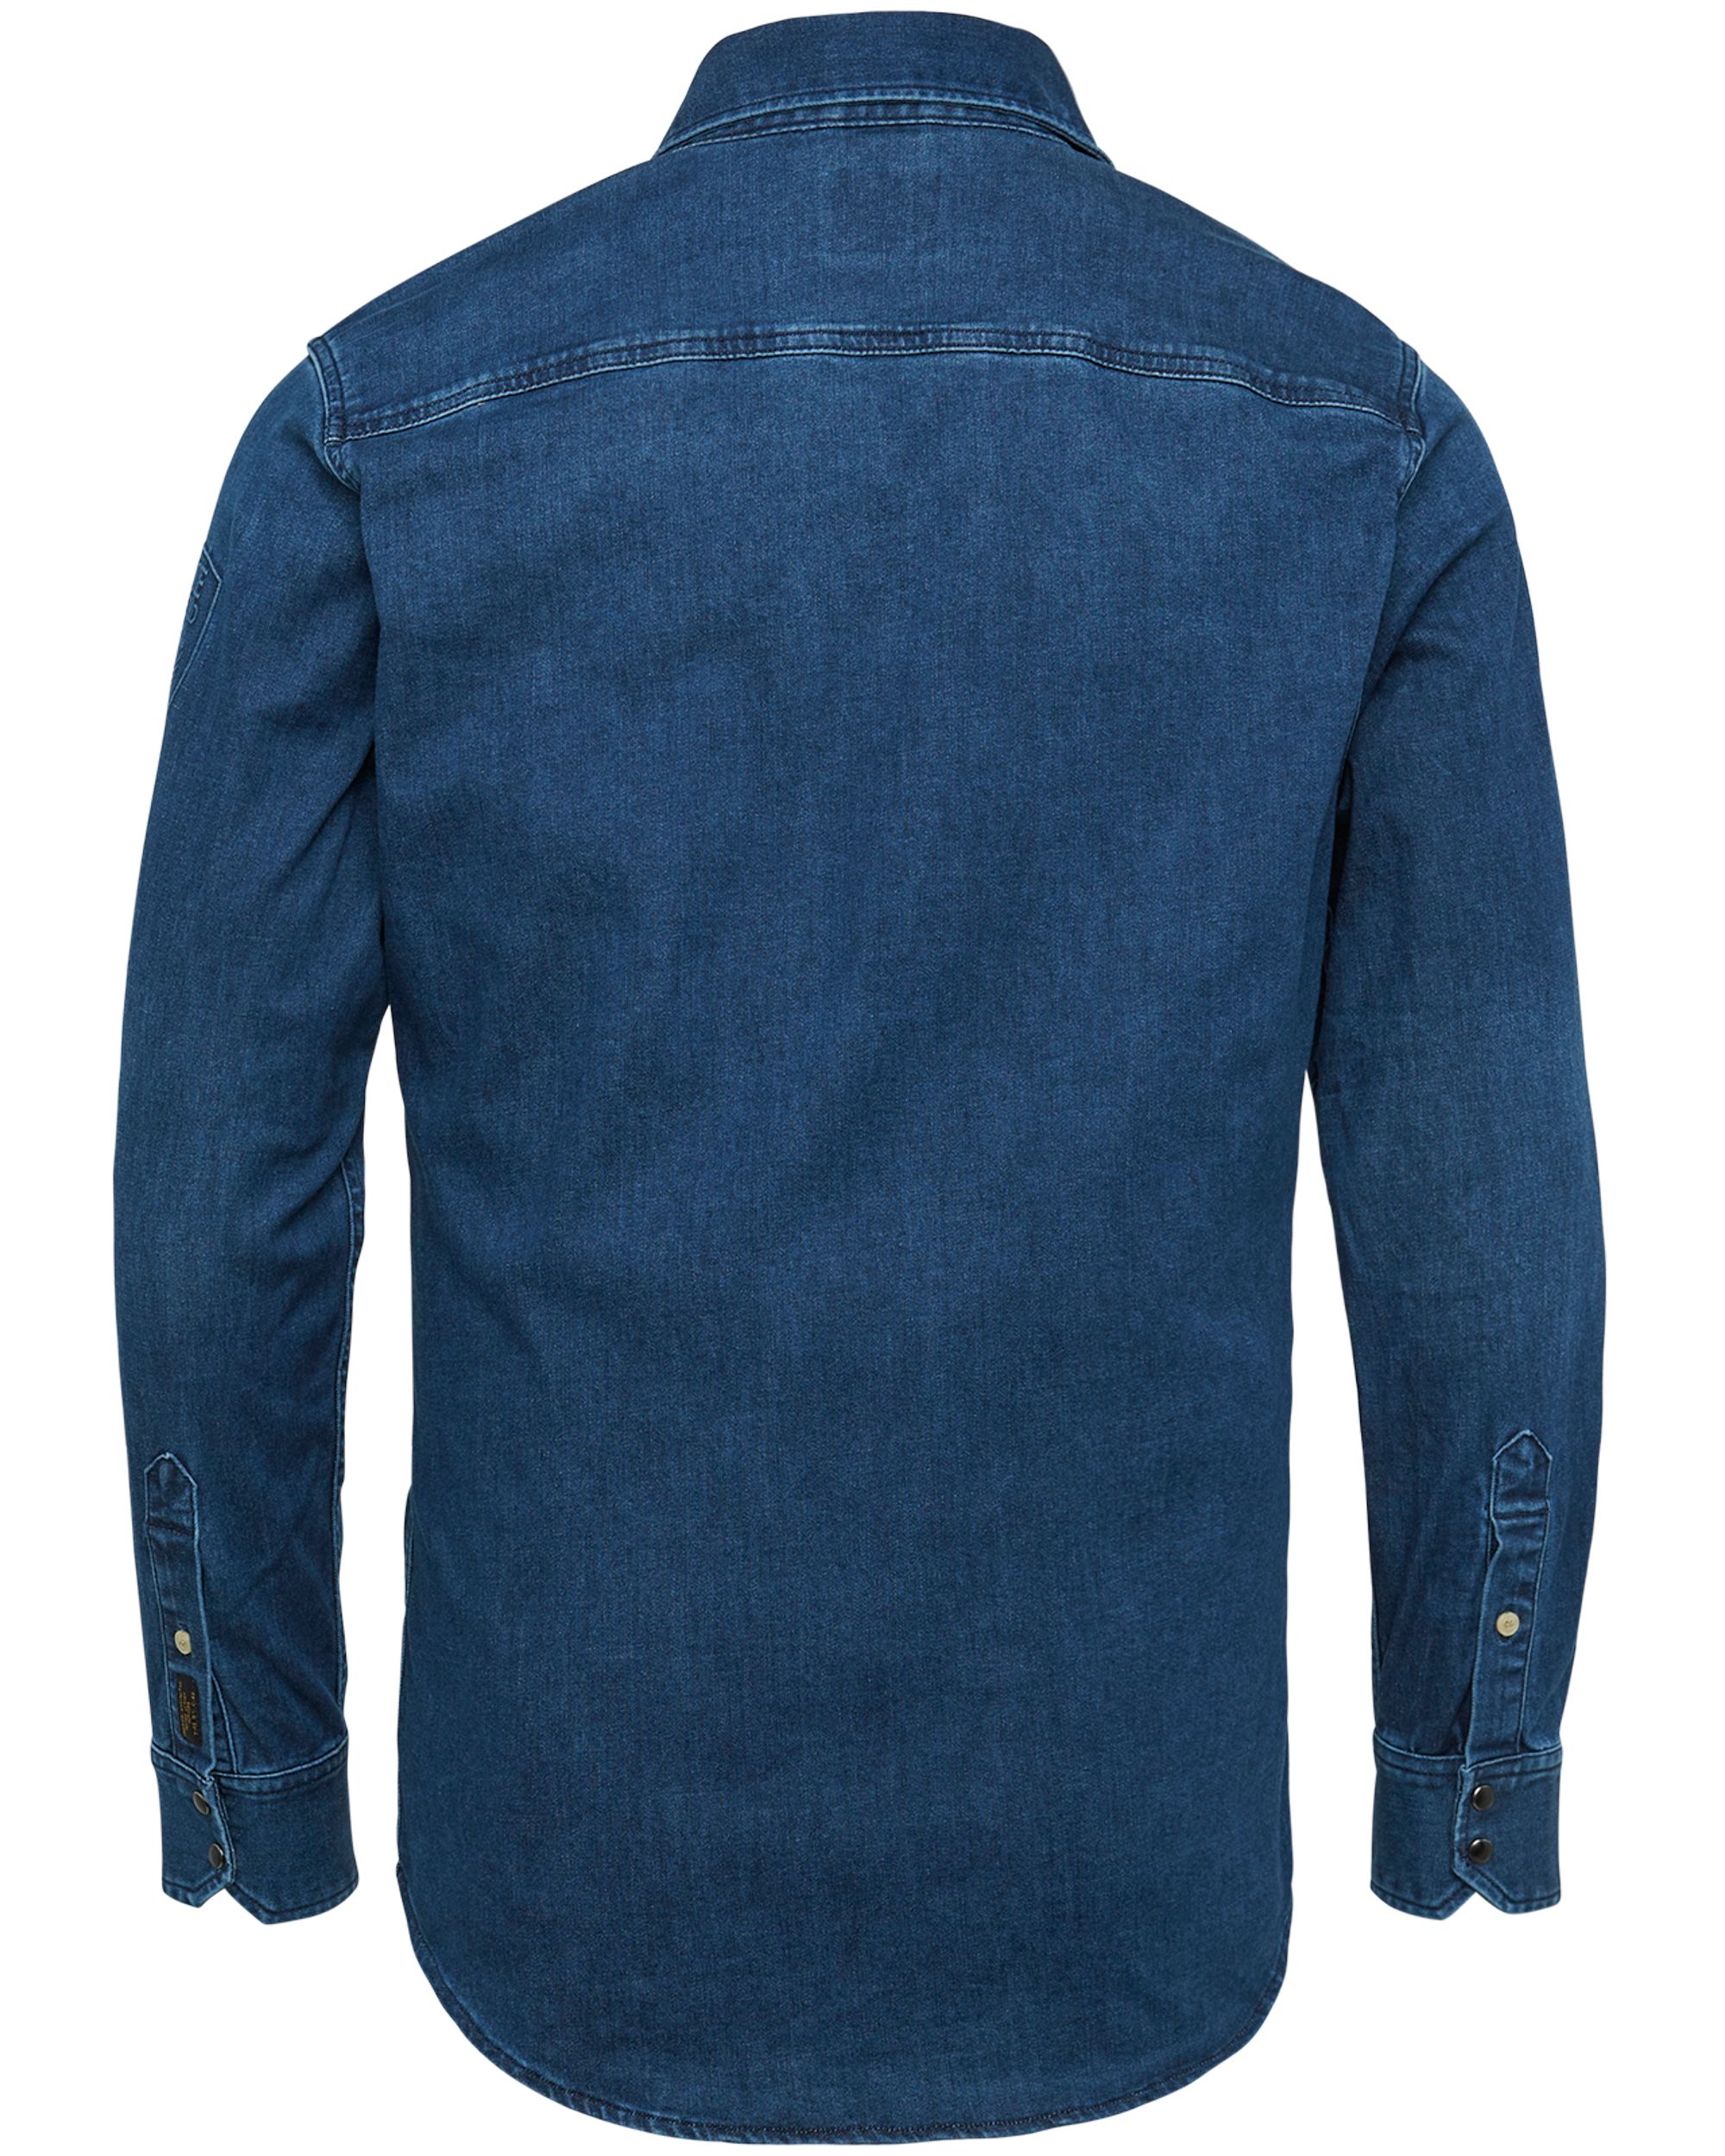 PME Legend Casual Overhemd LM Blauw 081946-001-L